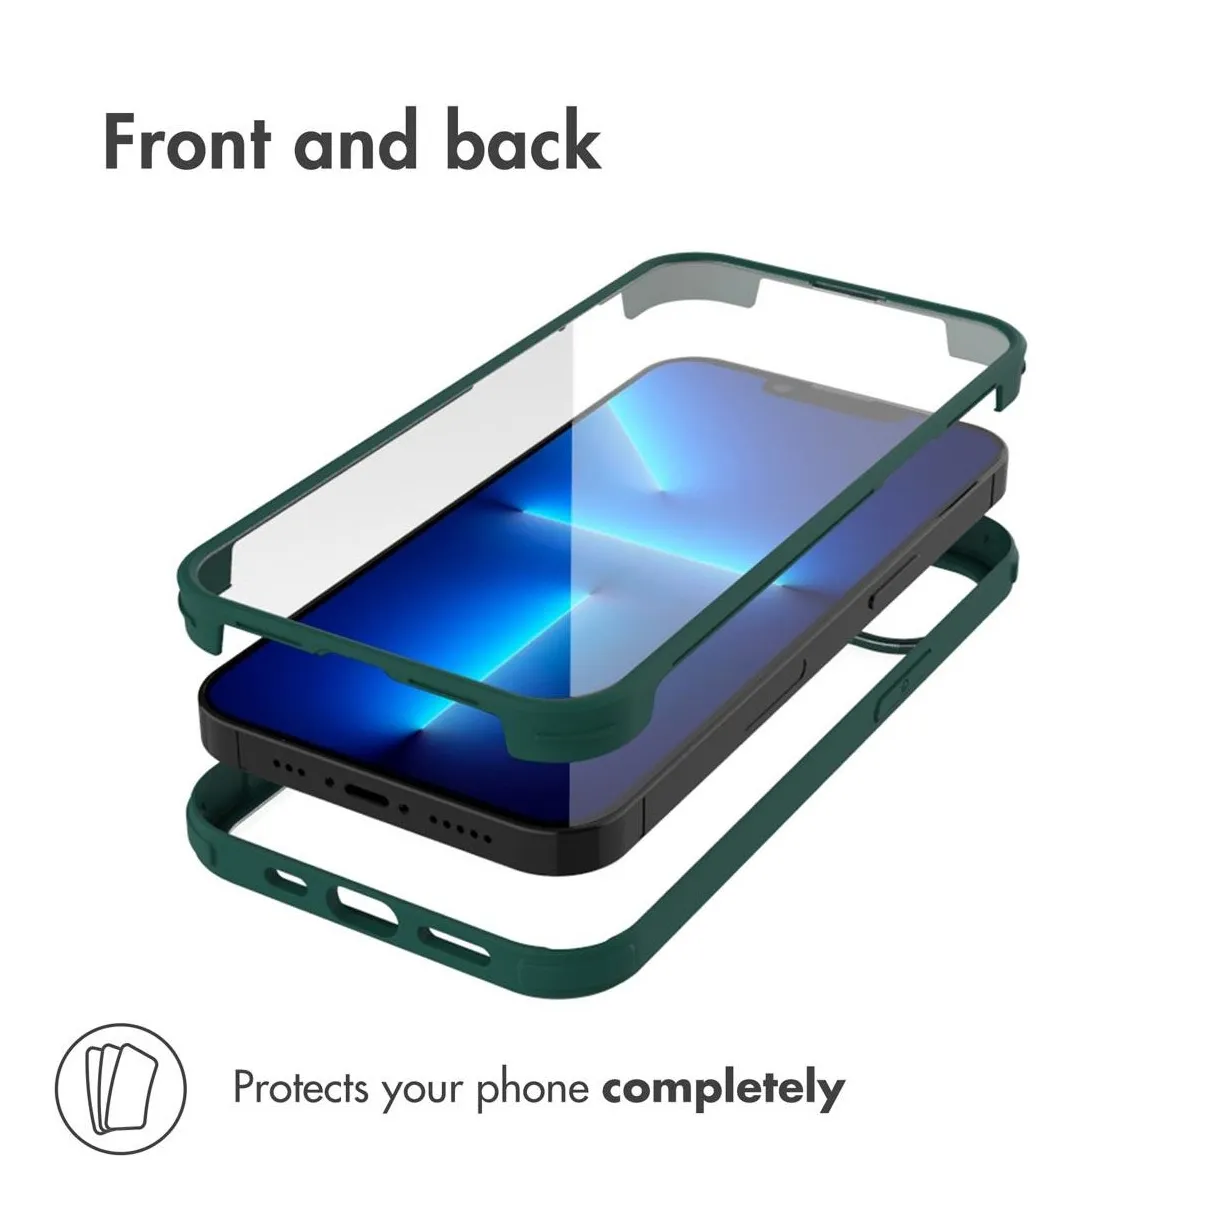 Accezz Full Protective Cover voor Apple iPhone 13 Mini Groen